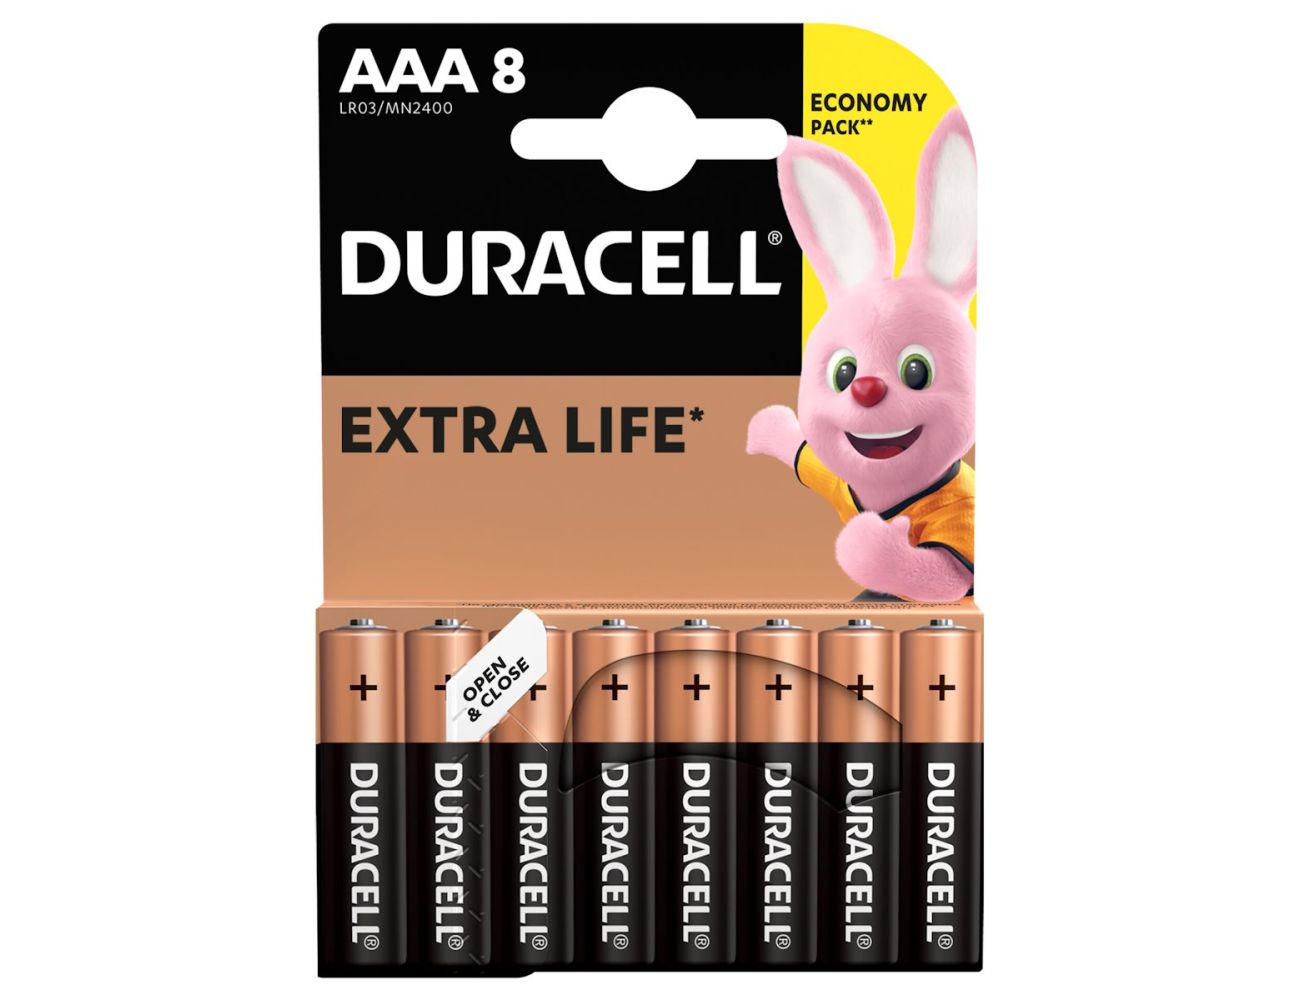 Батарейка ААА Duracell Basic LR03 1.5V Alkaline 8 шт.